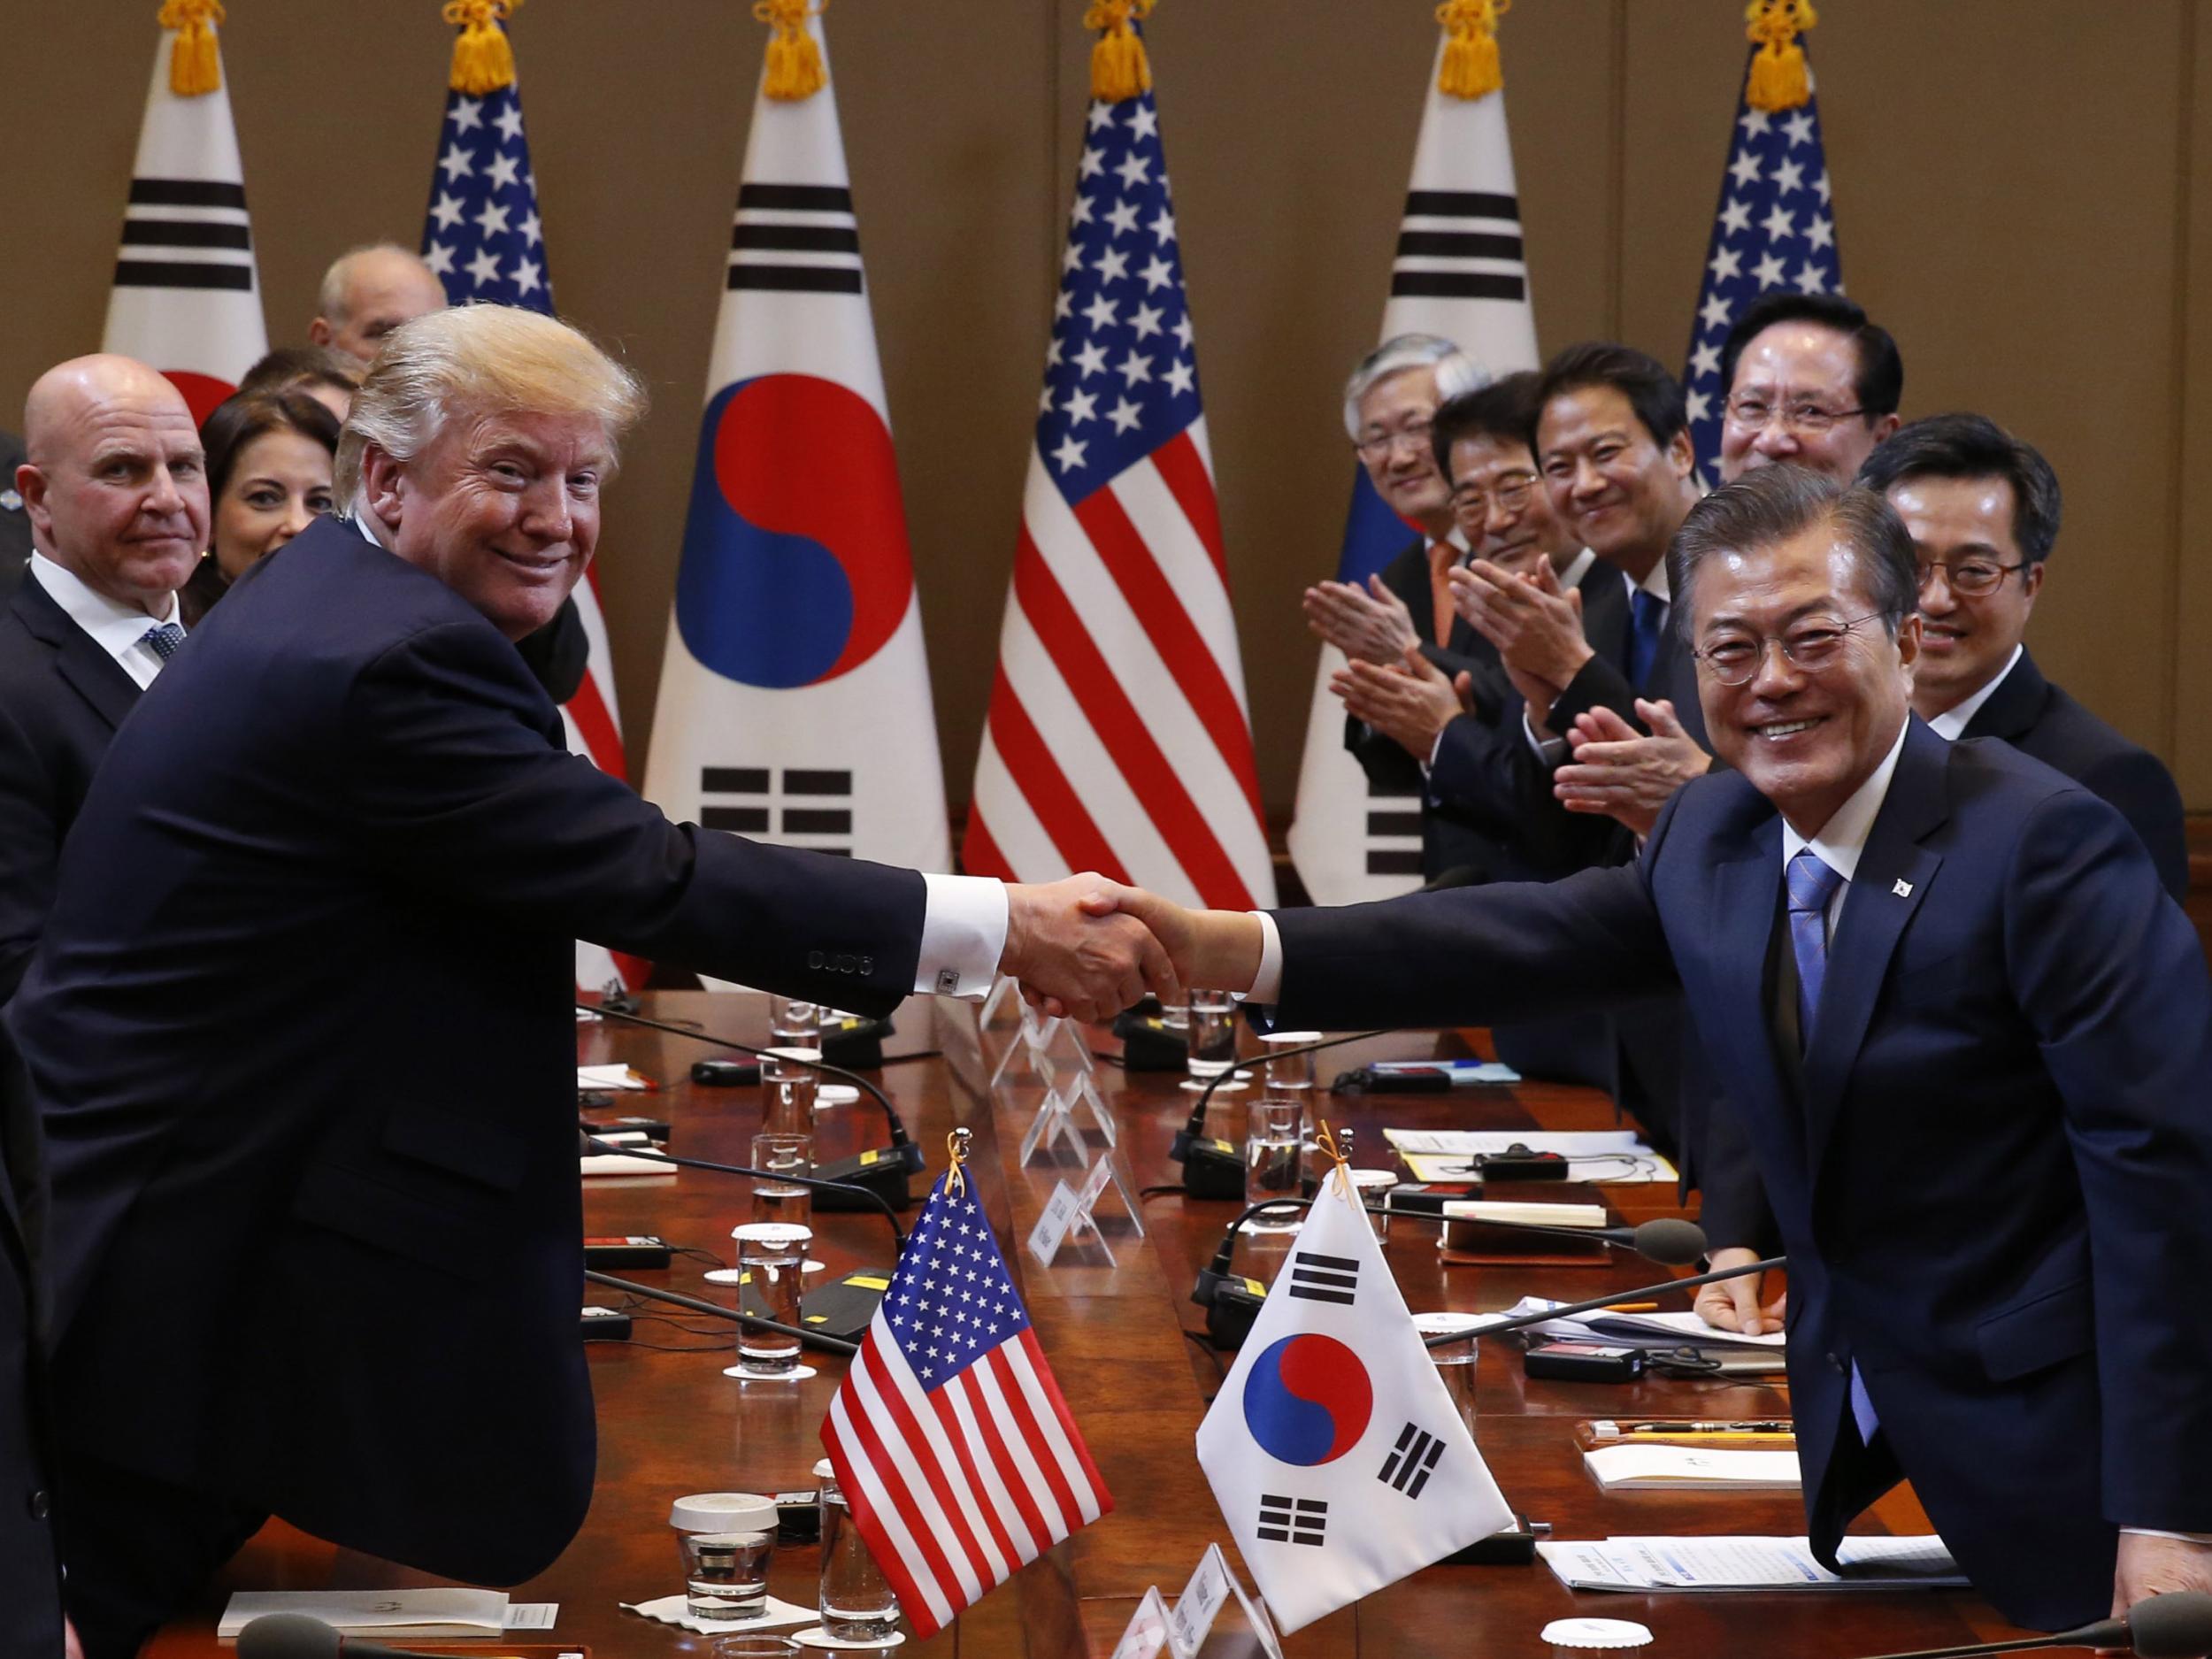 Trump and South Korean President Moon Jae-in shake hands before their summit meeting in Seoul